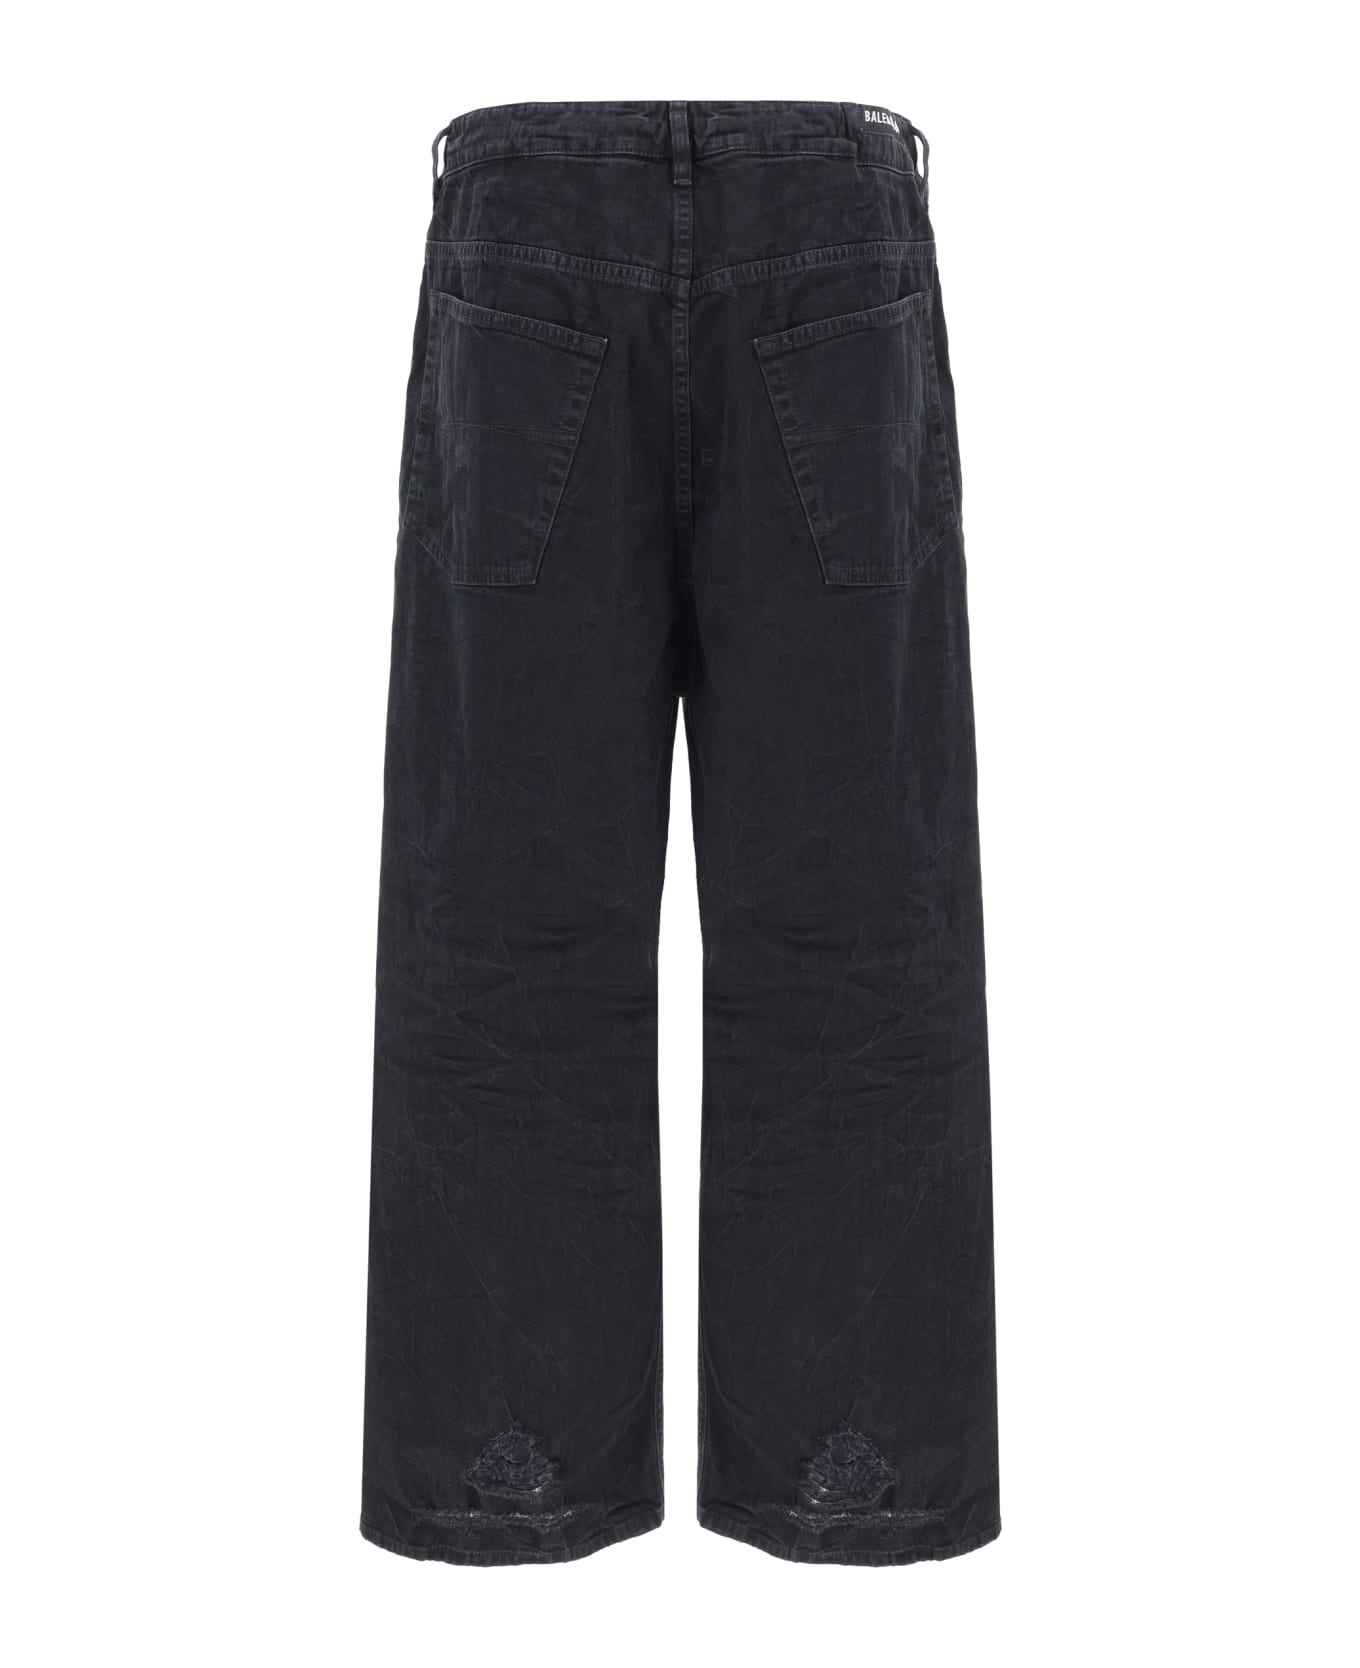 Balenciaga Denim Pants - Lightweight Black